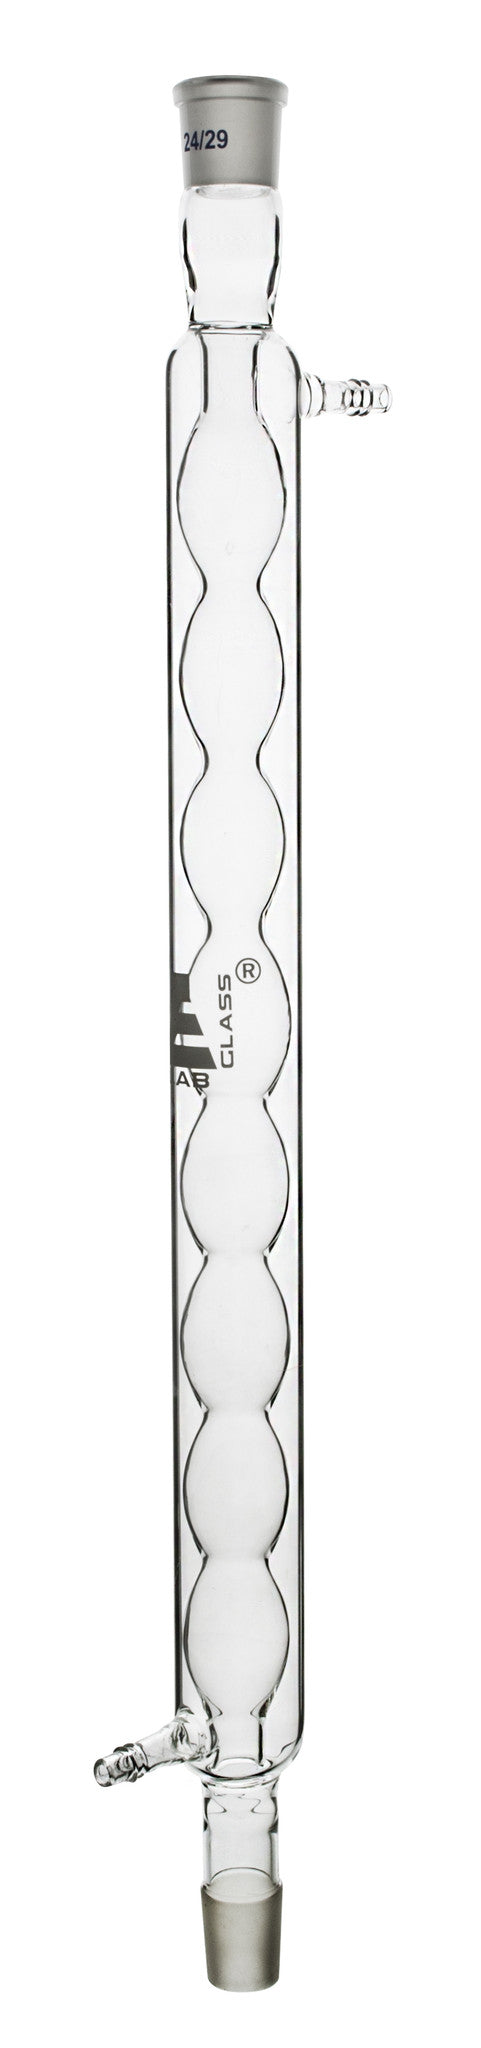 Condenser - Allihn Bulb, Socket size 19/26 & Cone size 19/26, effective length 16mm